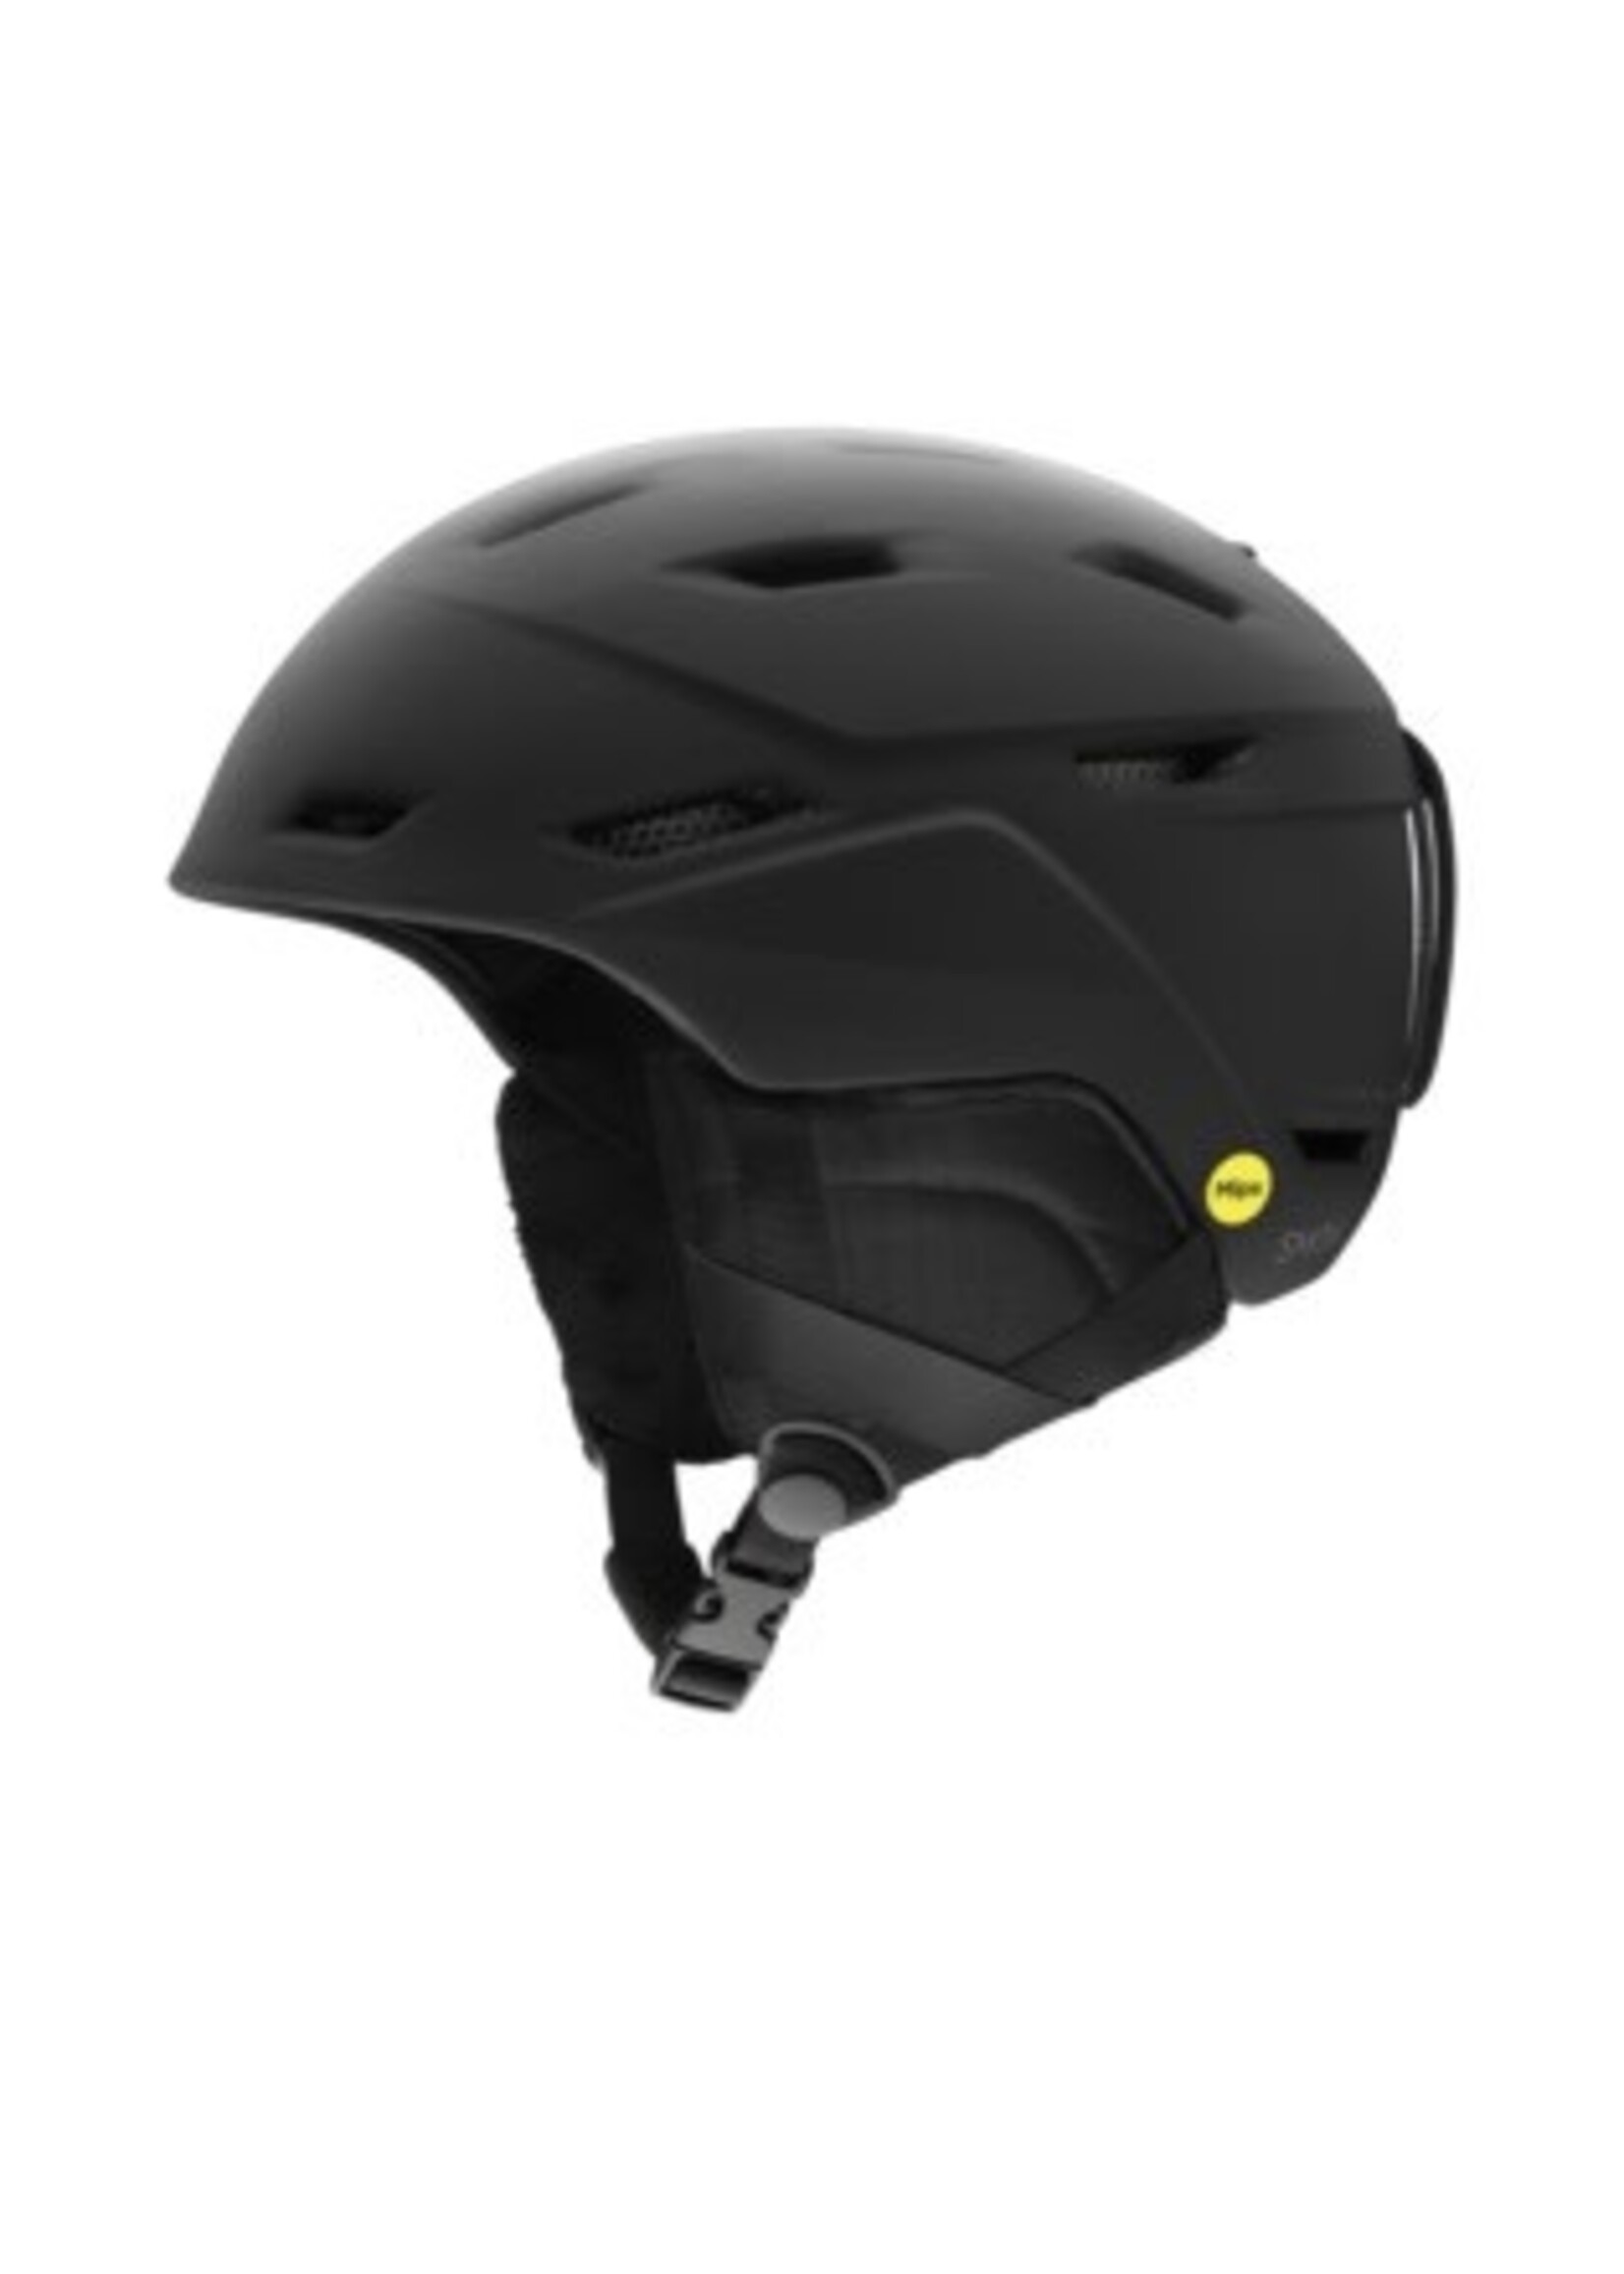 Smith Junior Helmet Prospect MIPS